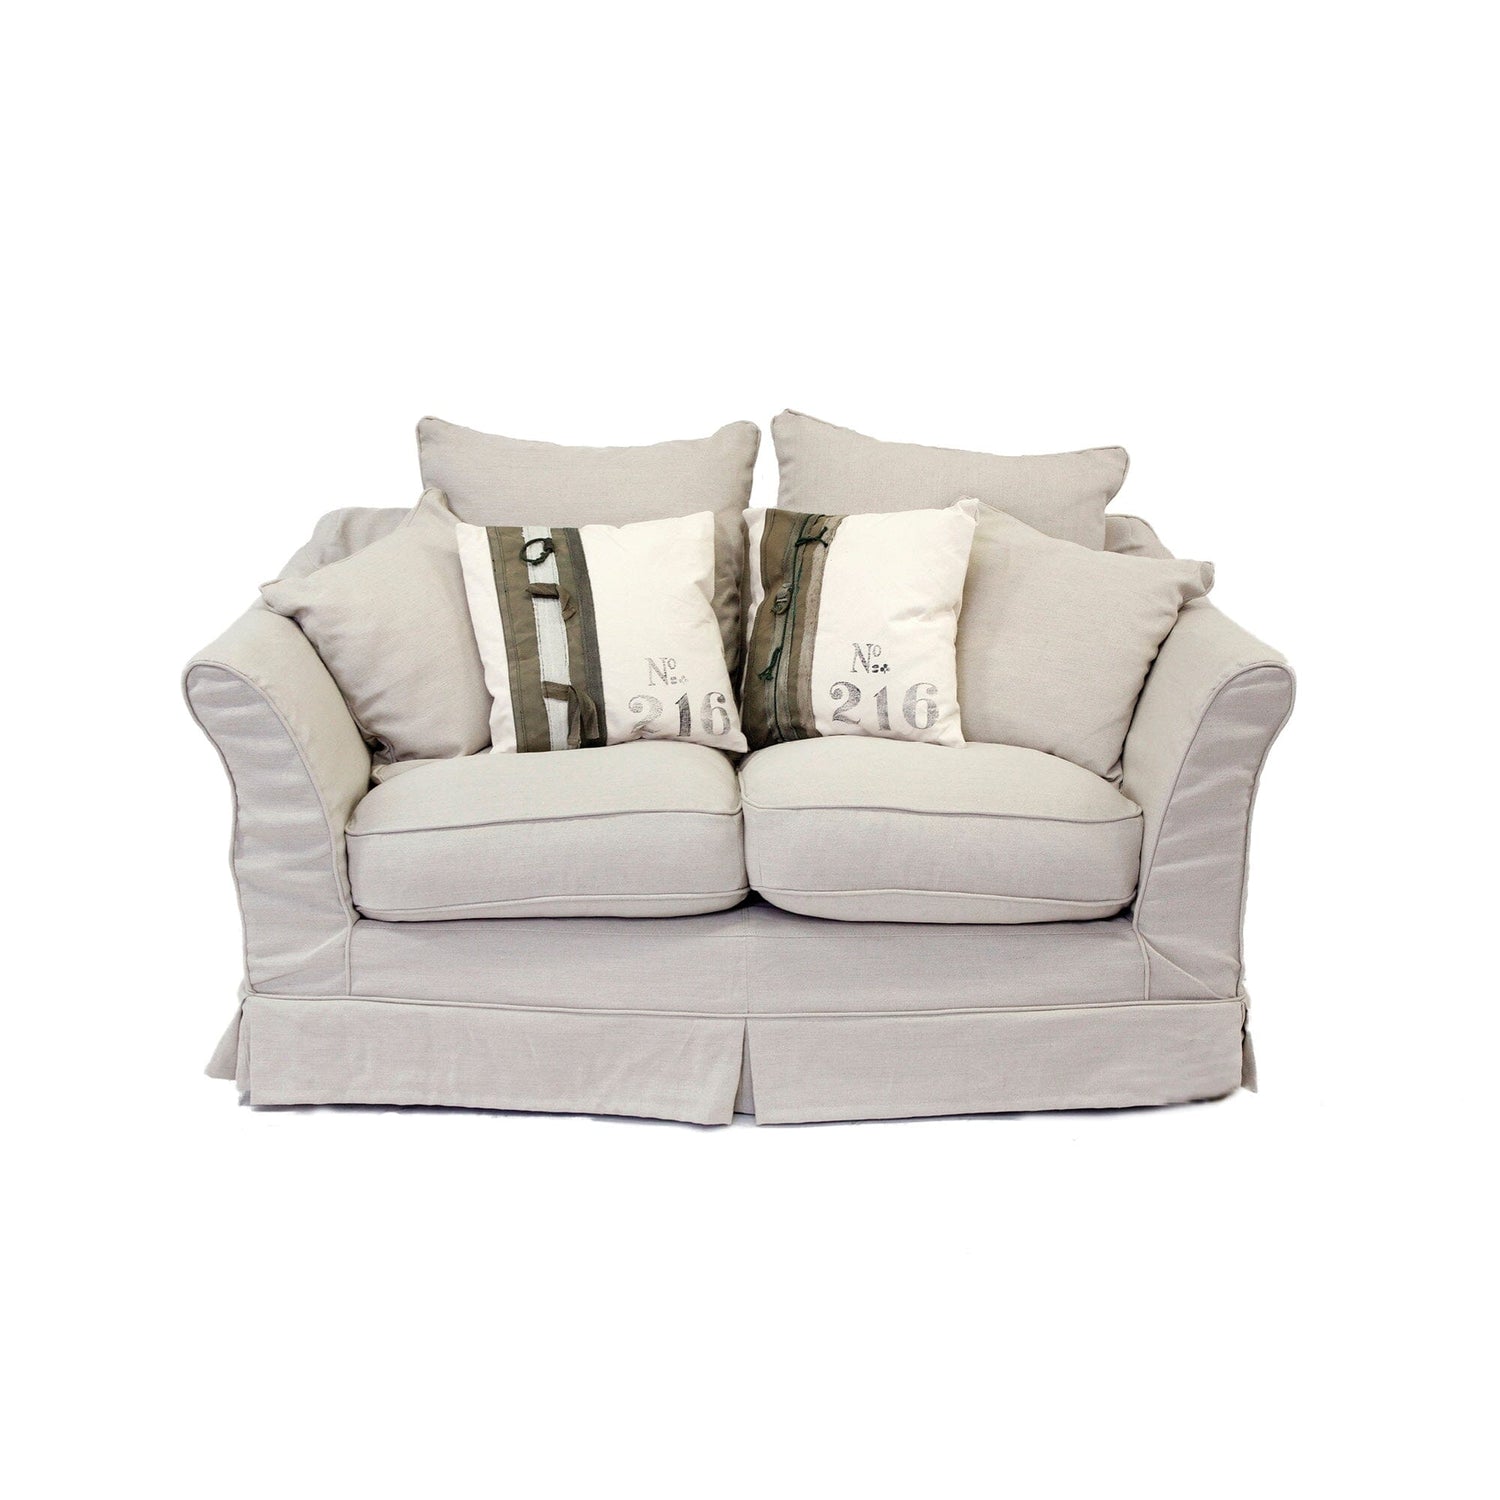 Lisboa Sofa - 2 Seater Living Furniture Beachwood Designs Salt &amp; Pepper Linen Cotton 